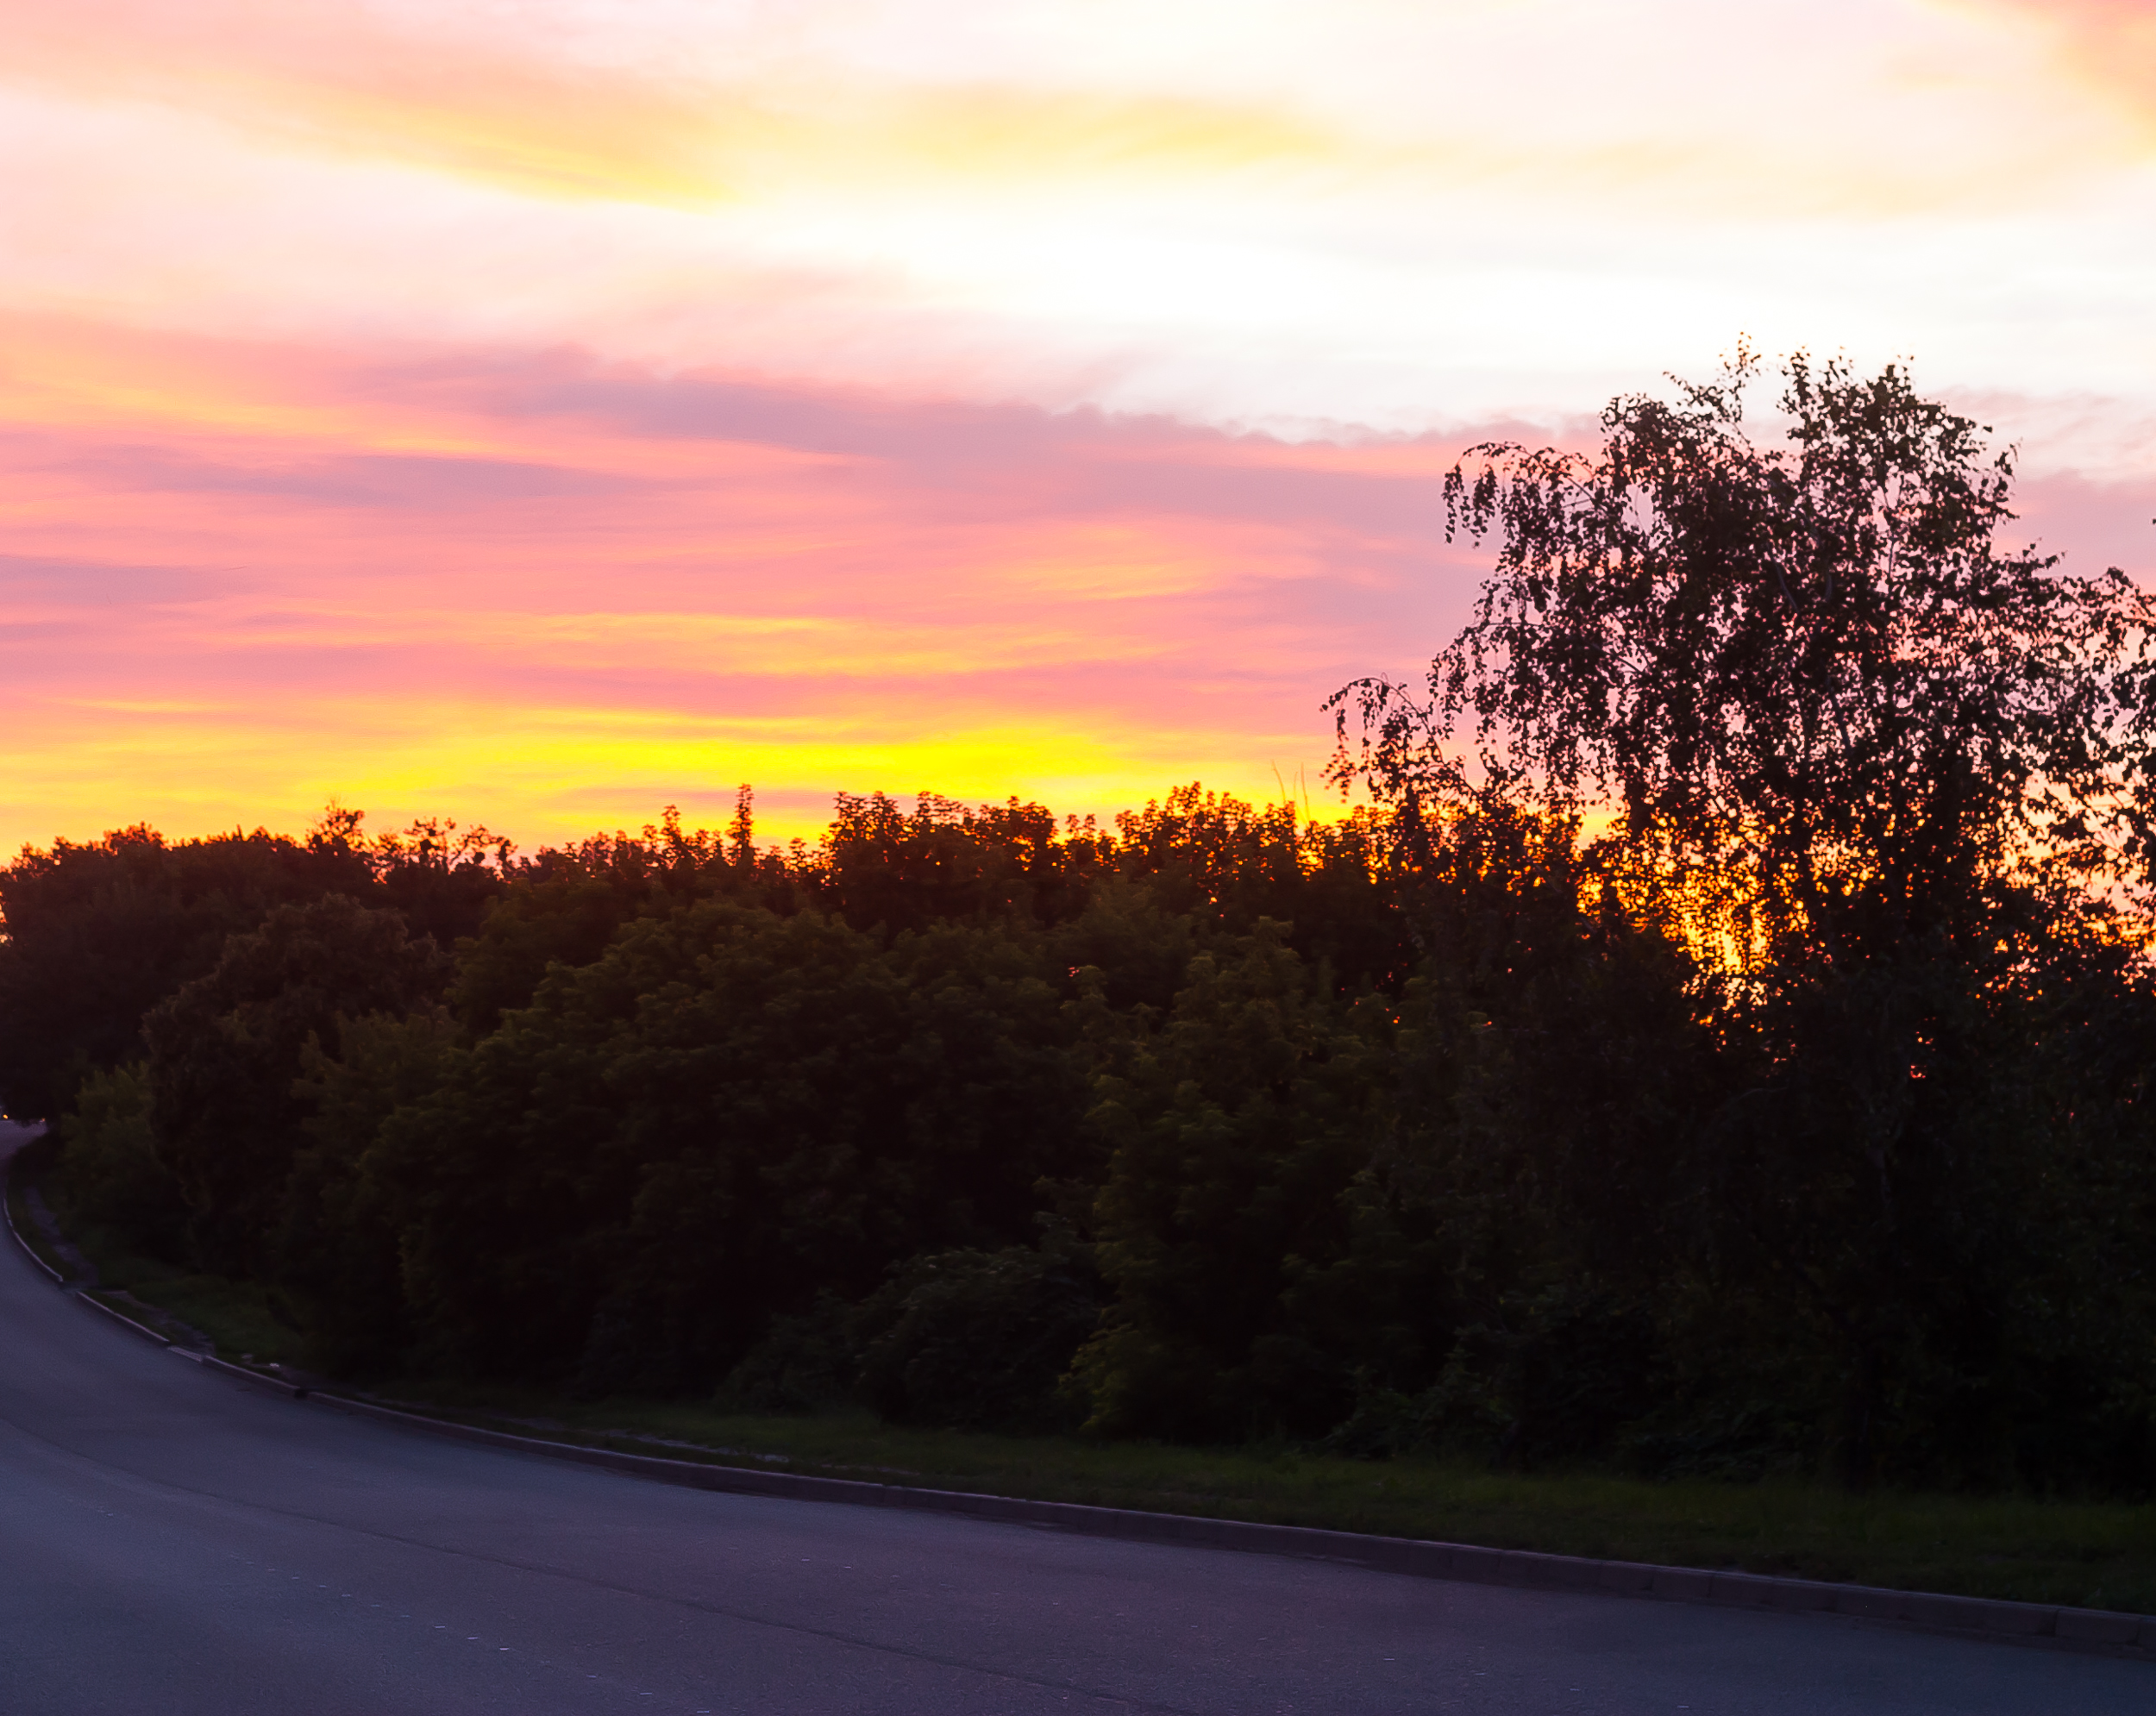 Sunset near the road photo